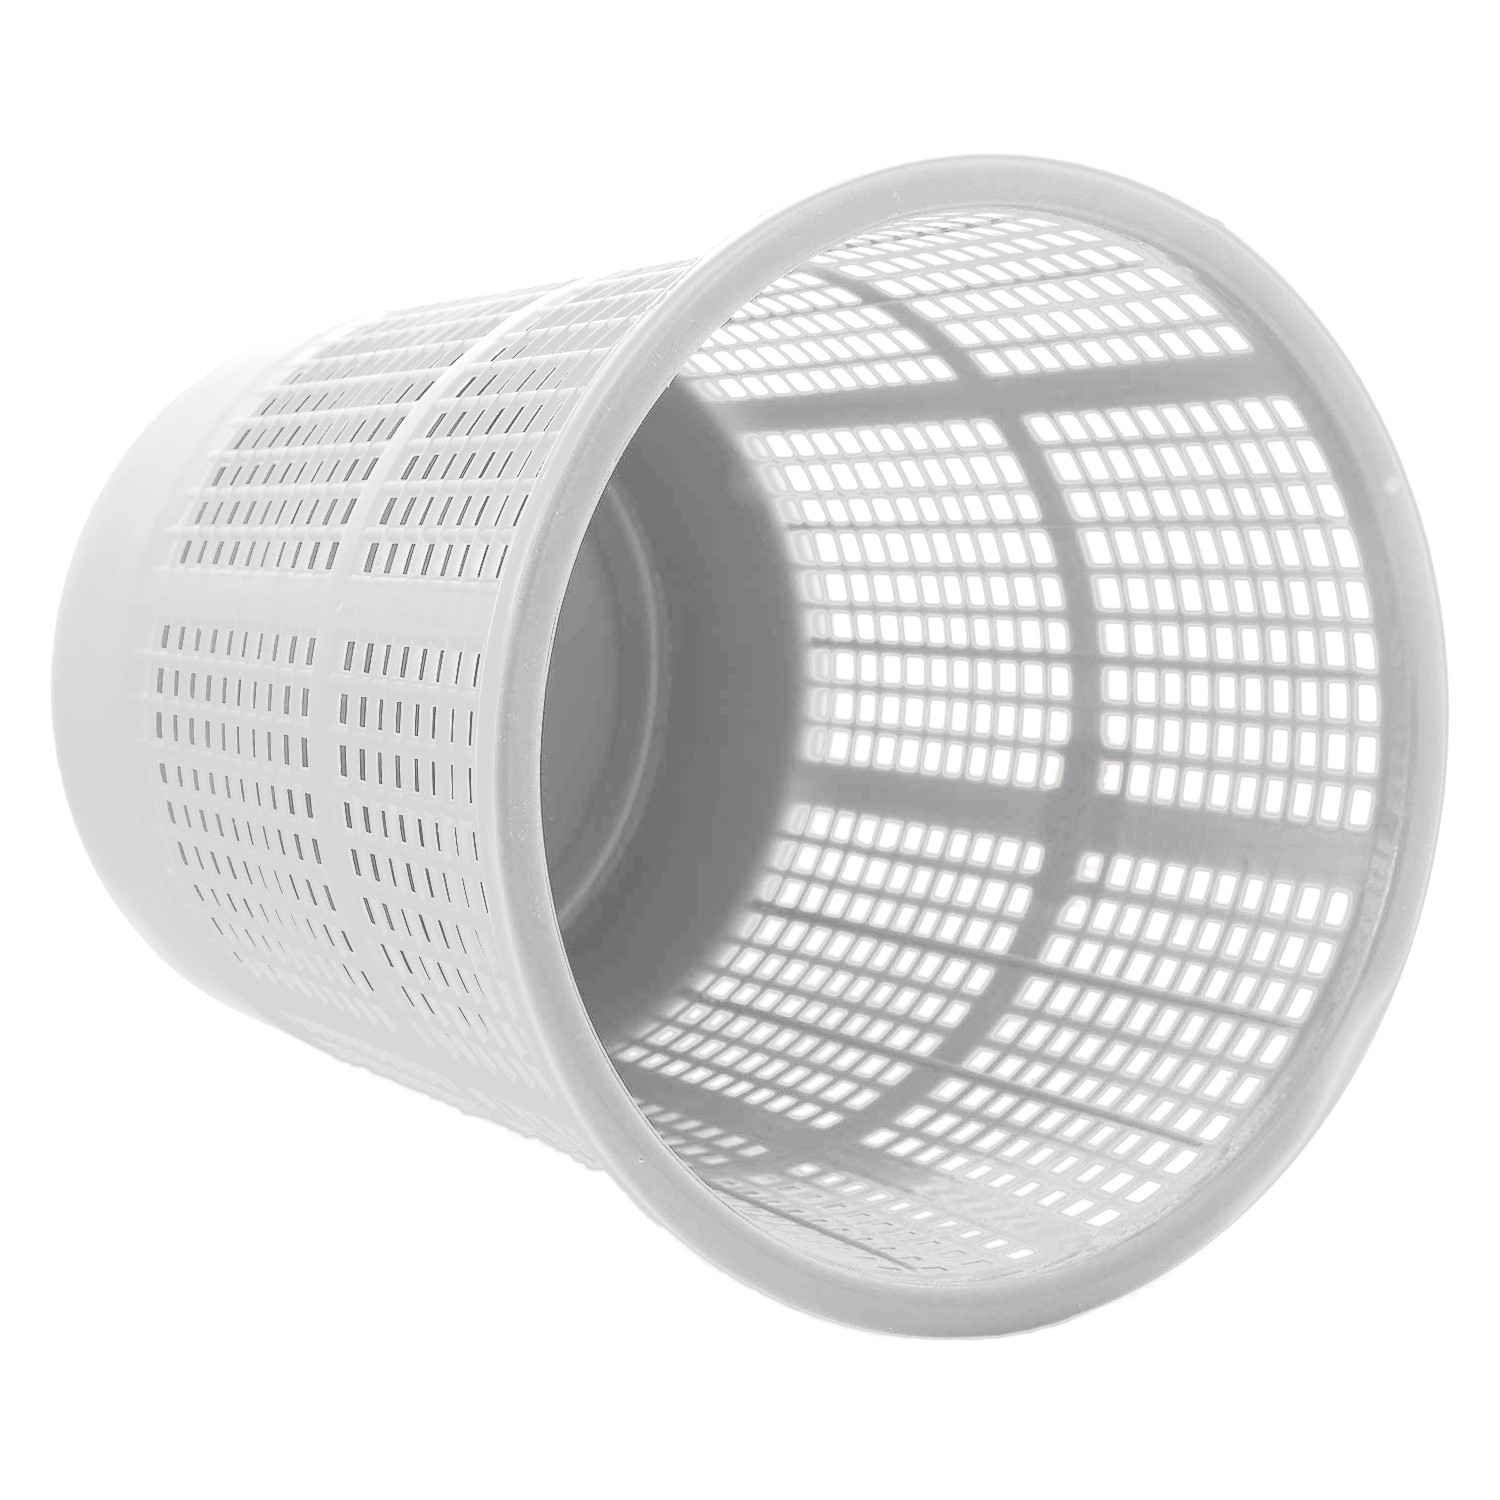 Kuber Industries Mesh Design Plastic Dustbin, Garbage Bin For Home, Kitchen, Office, 5Ltr.- Pack of 4 (Black & White)-47KM0791